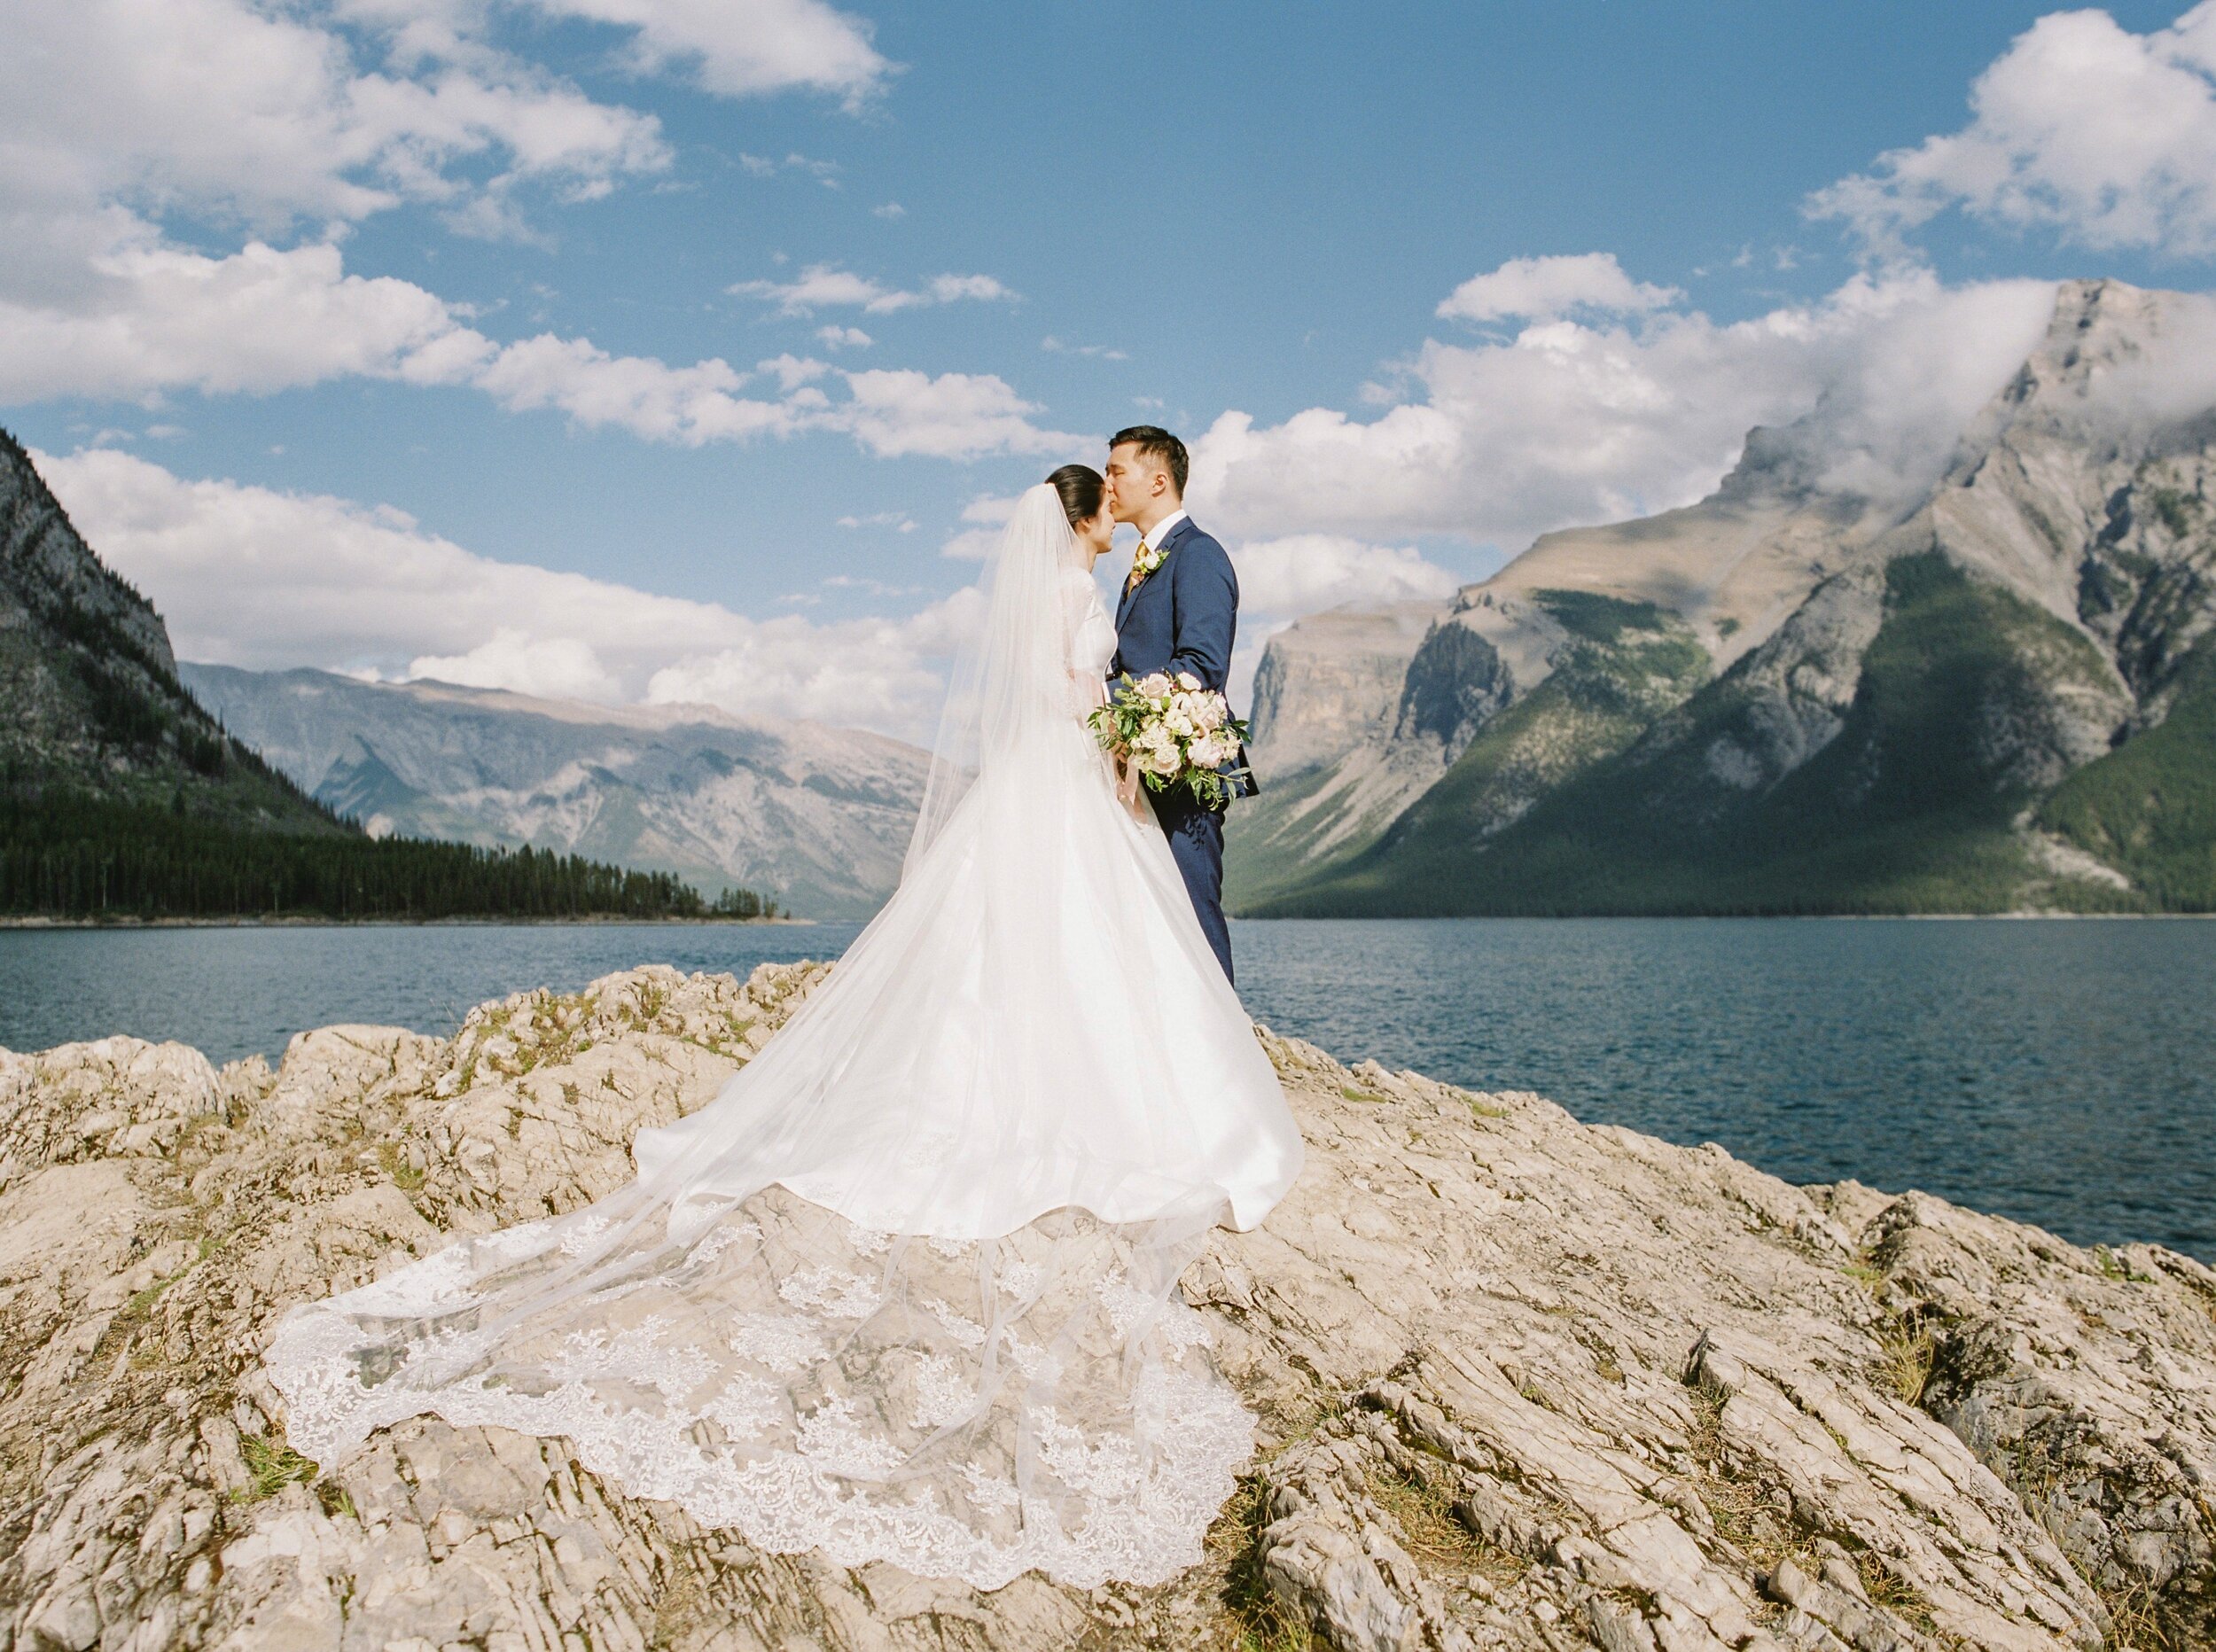  full sun stunning mountain landsape wedding and pre-wedding photo in banff | Fairmont Banff Springs hotel wedding photographers | fine art film photography | portra 400 